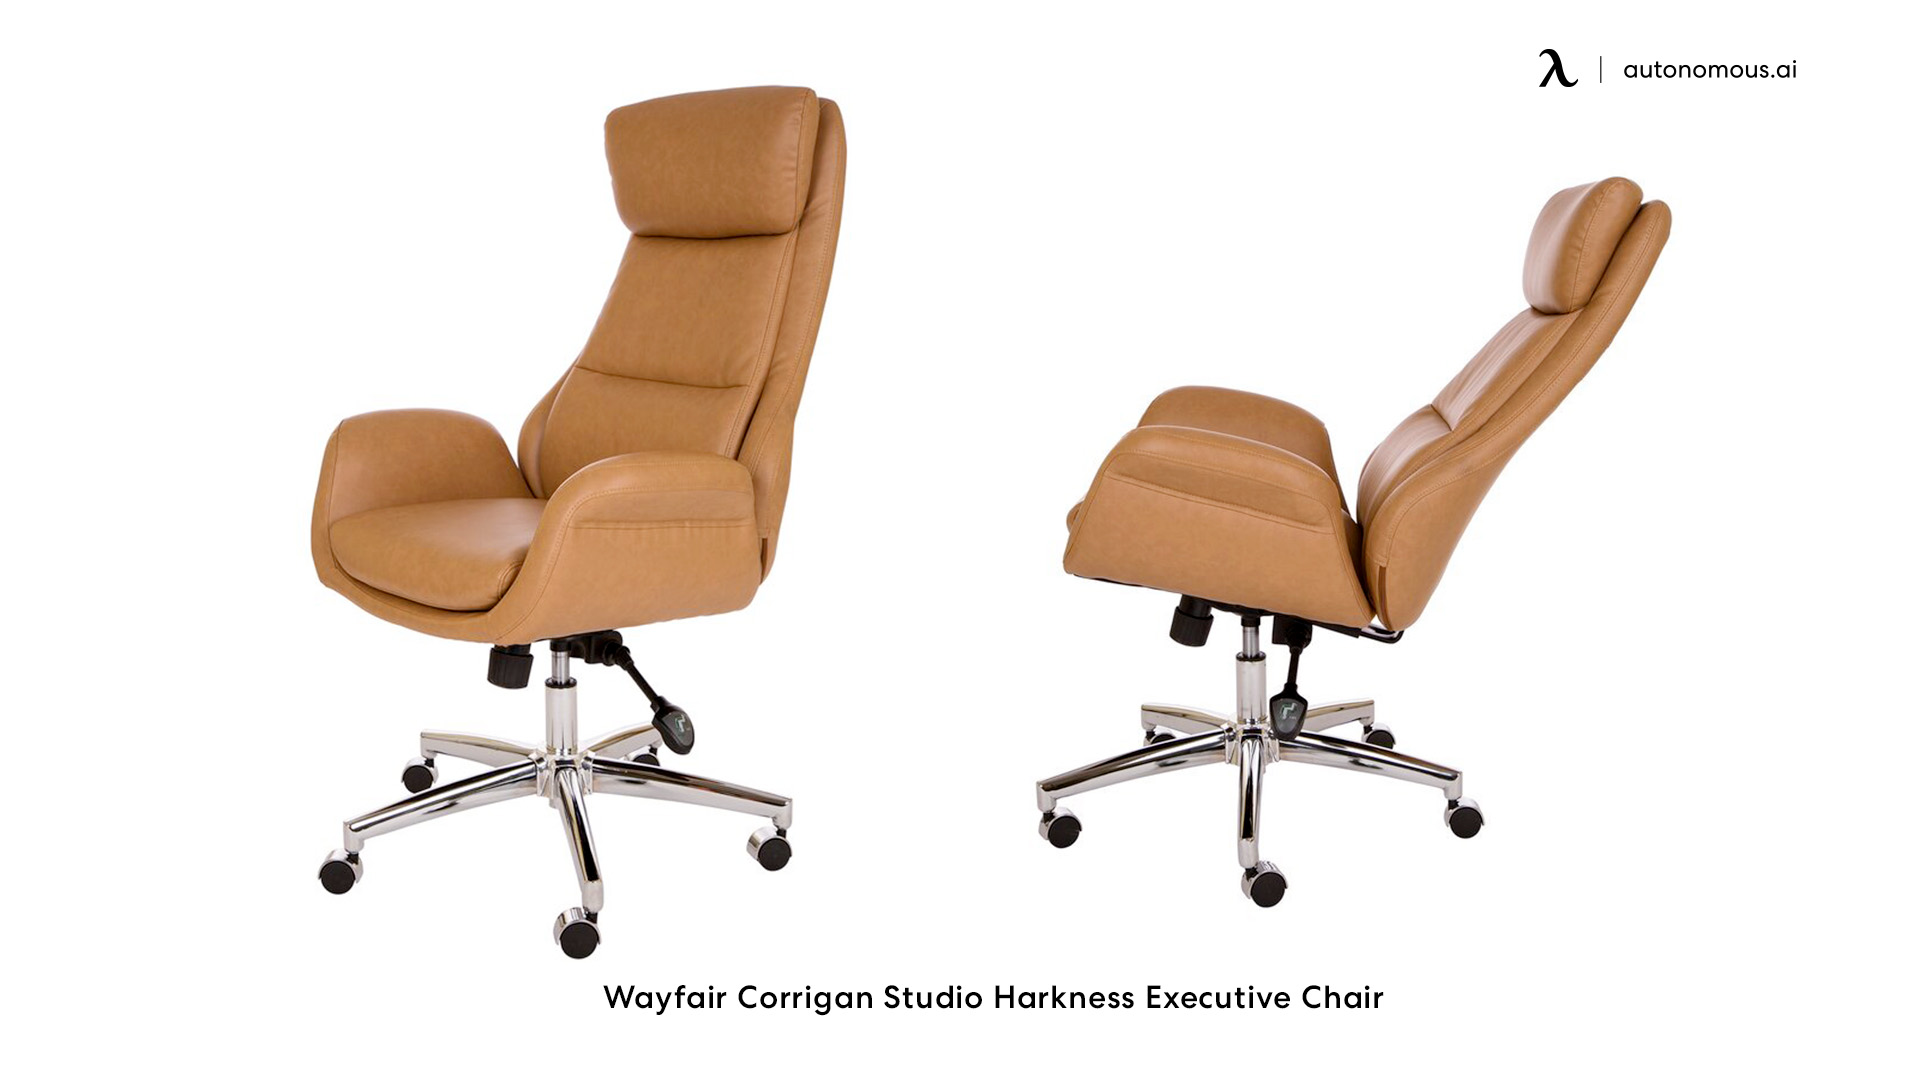 Wayfair Corrigan stylish office chair